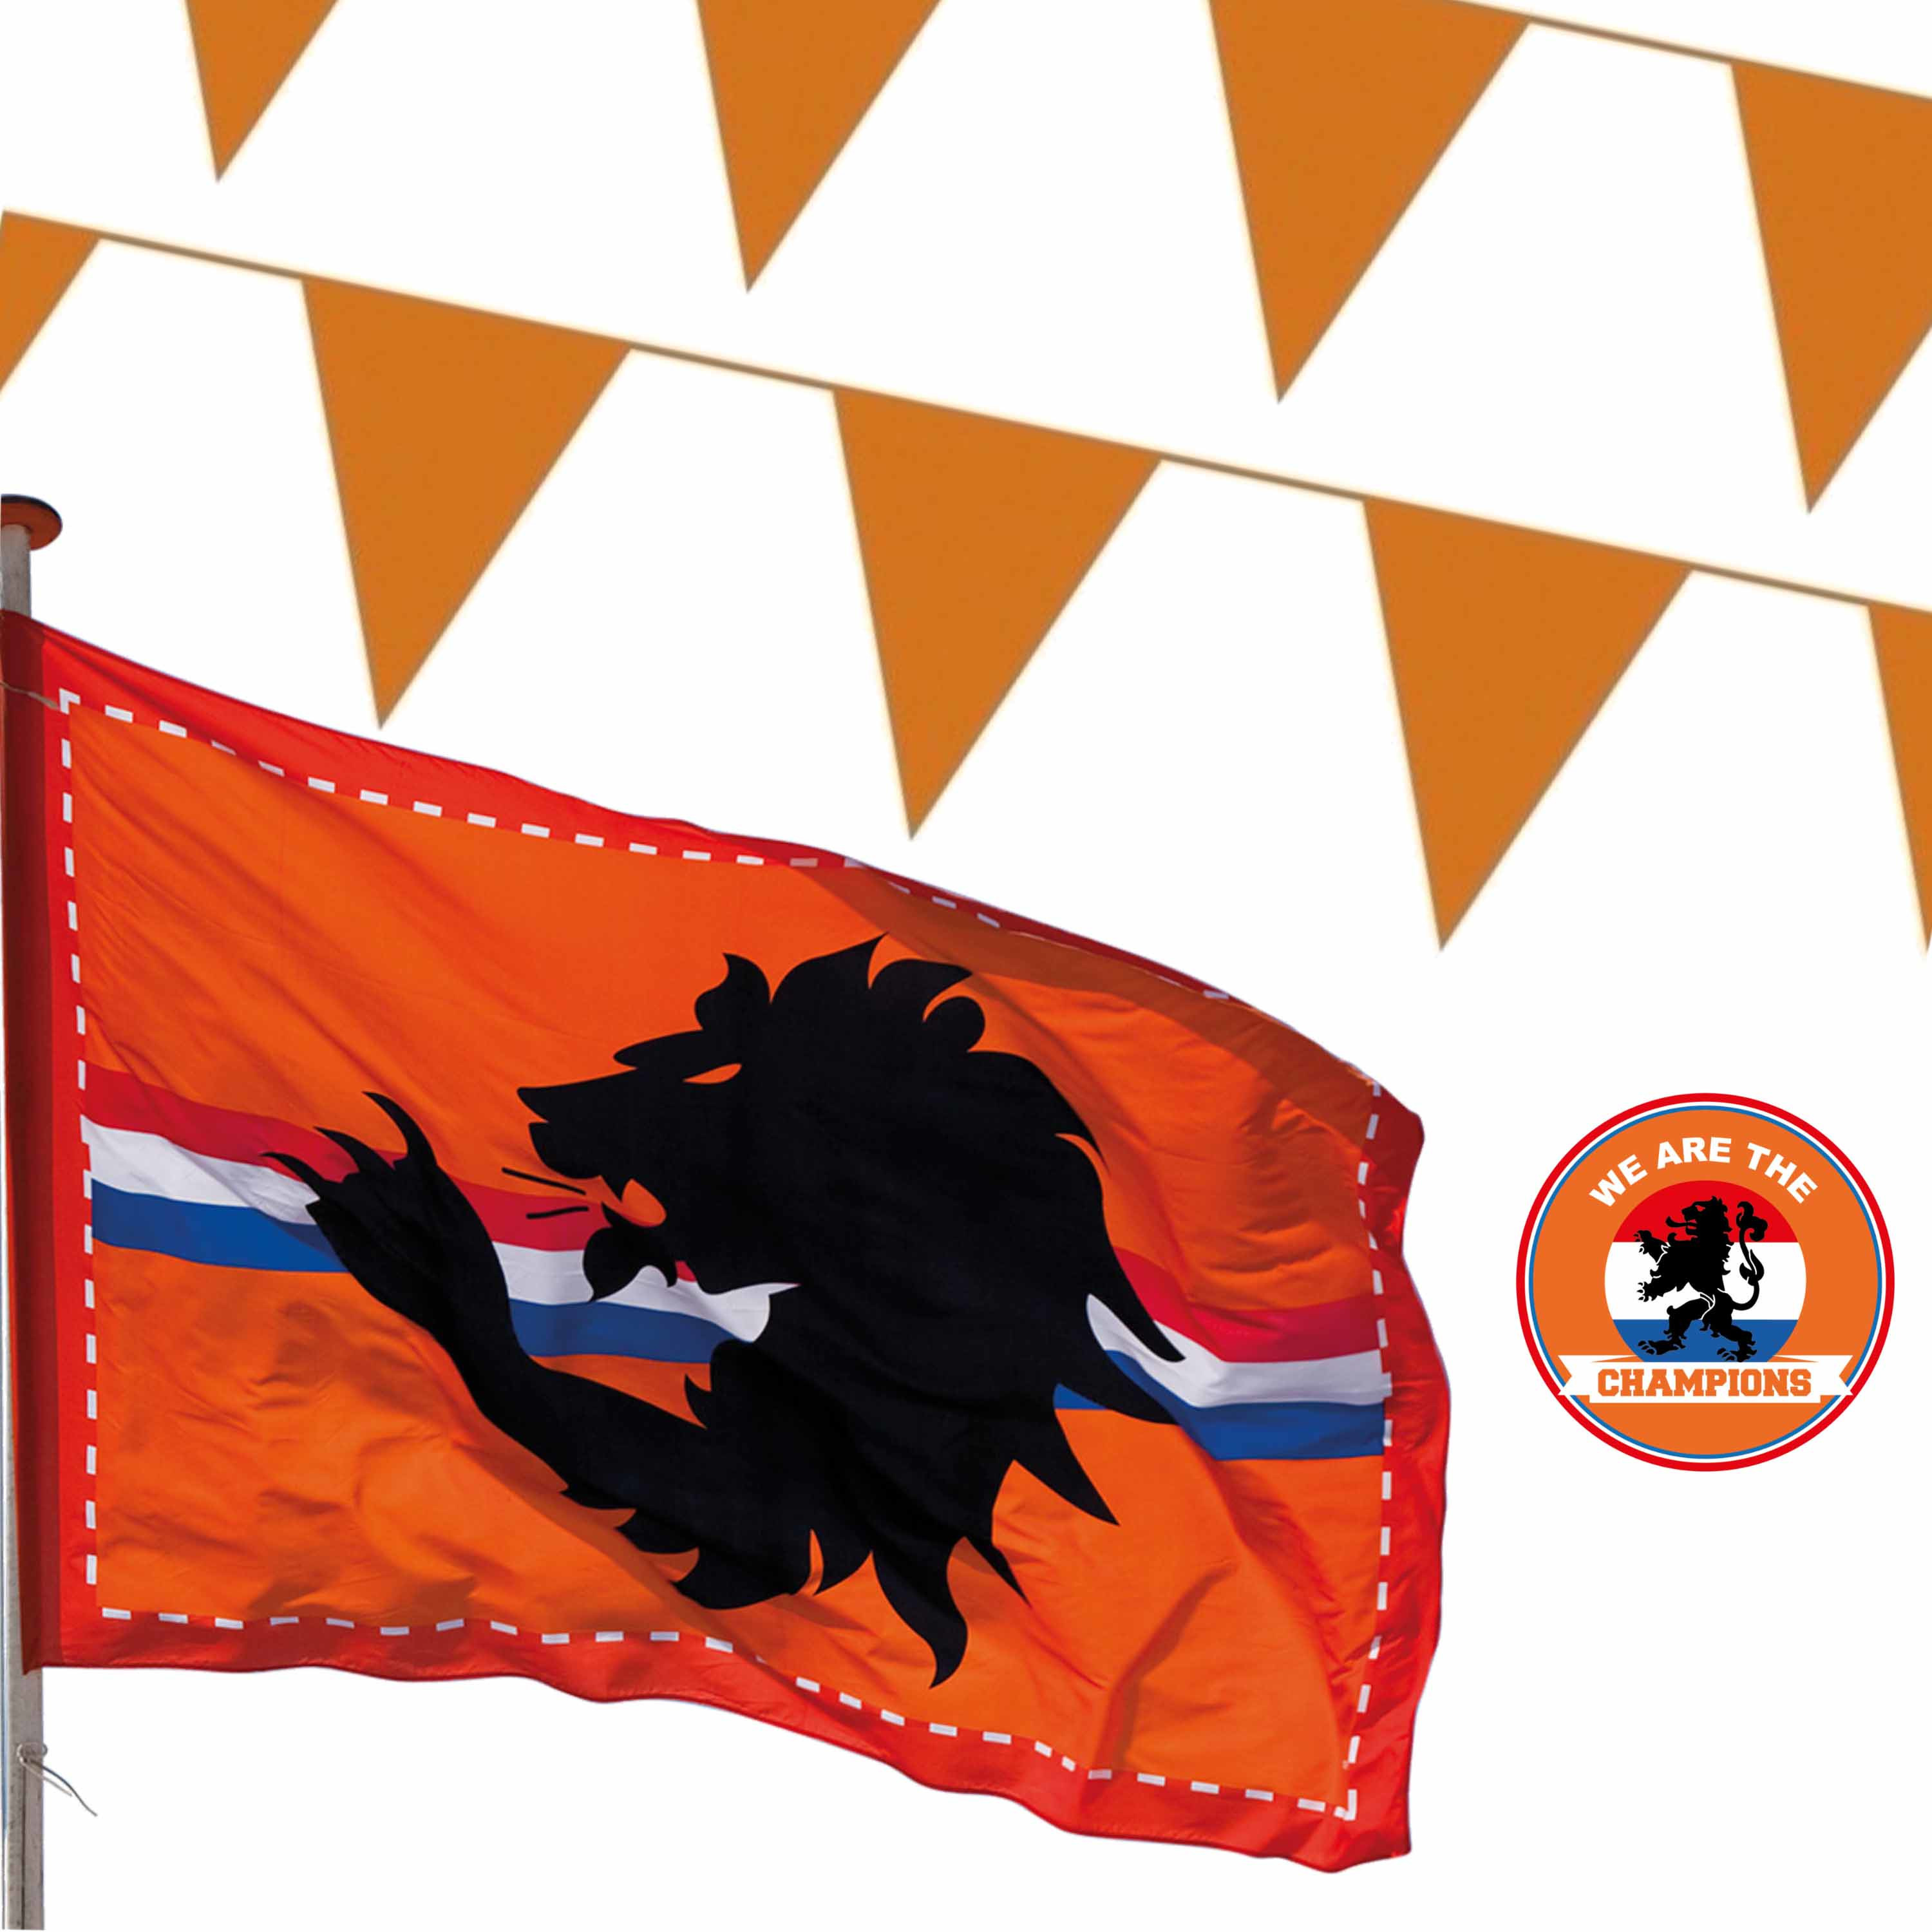 Ek oranje straat- huis versiering pakket met oa 1x Mega Holland vlag, 300 meter oranje vlaggenlijnen